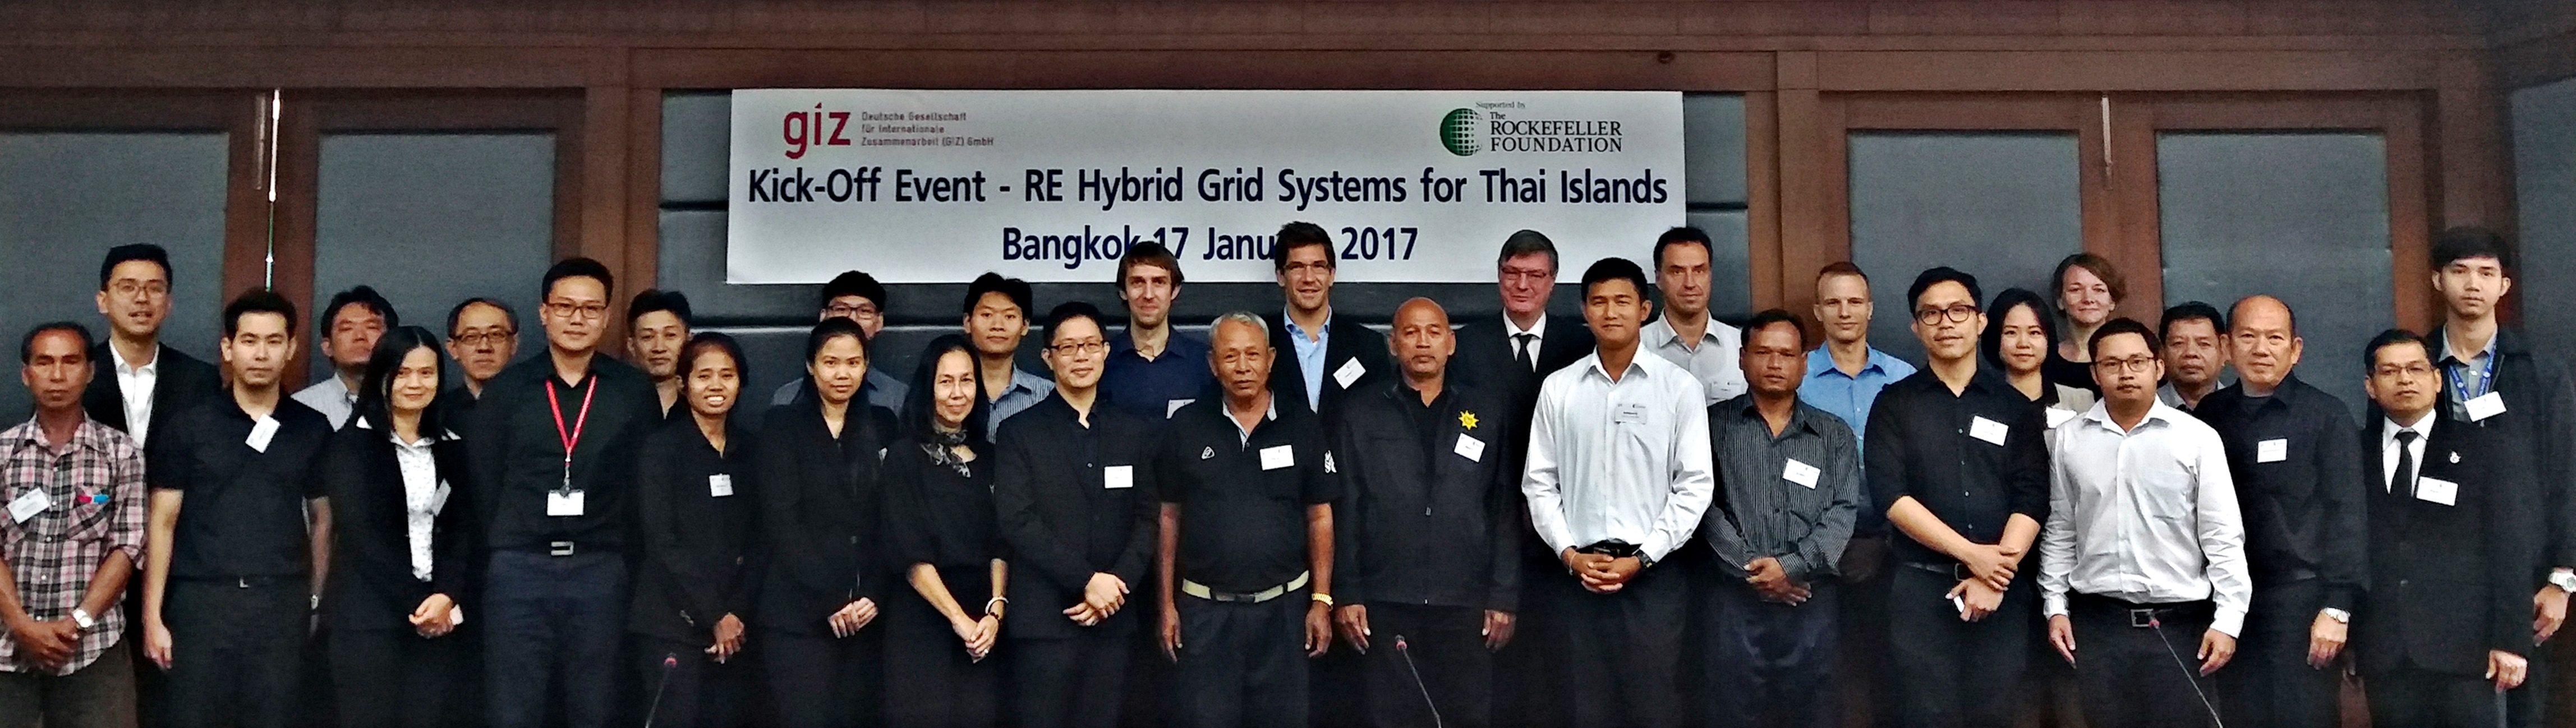 Visionary Thai Island Communities Choose Renewable Energy